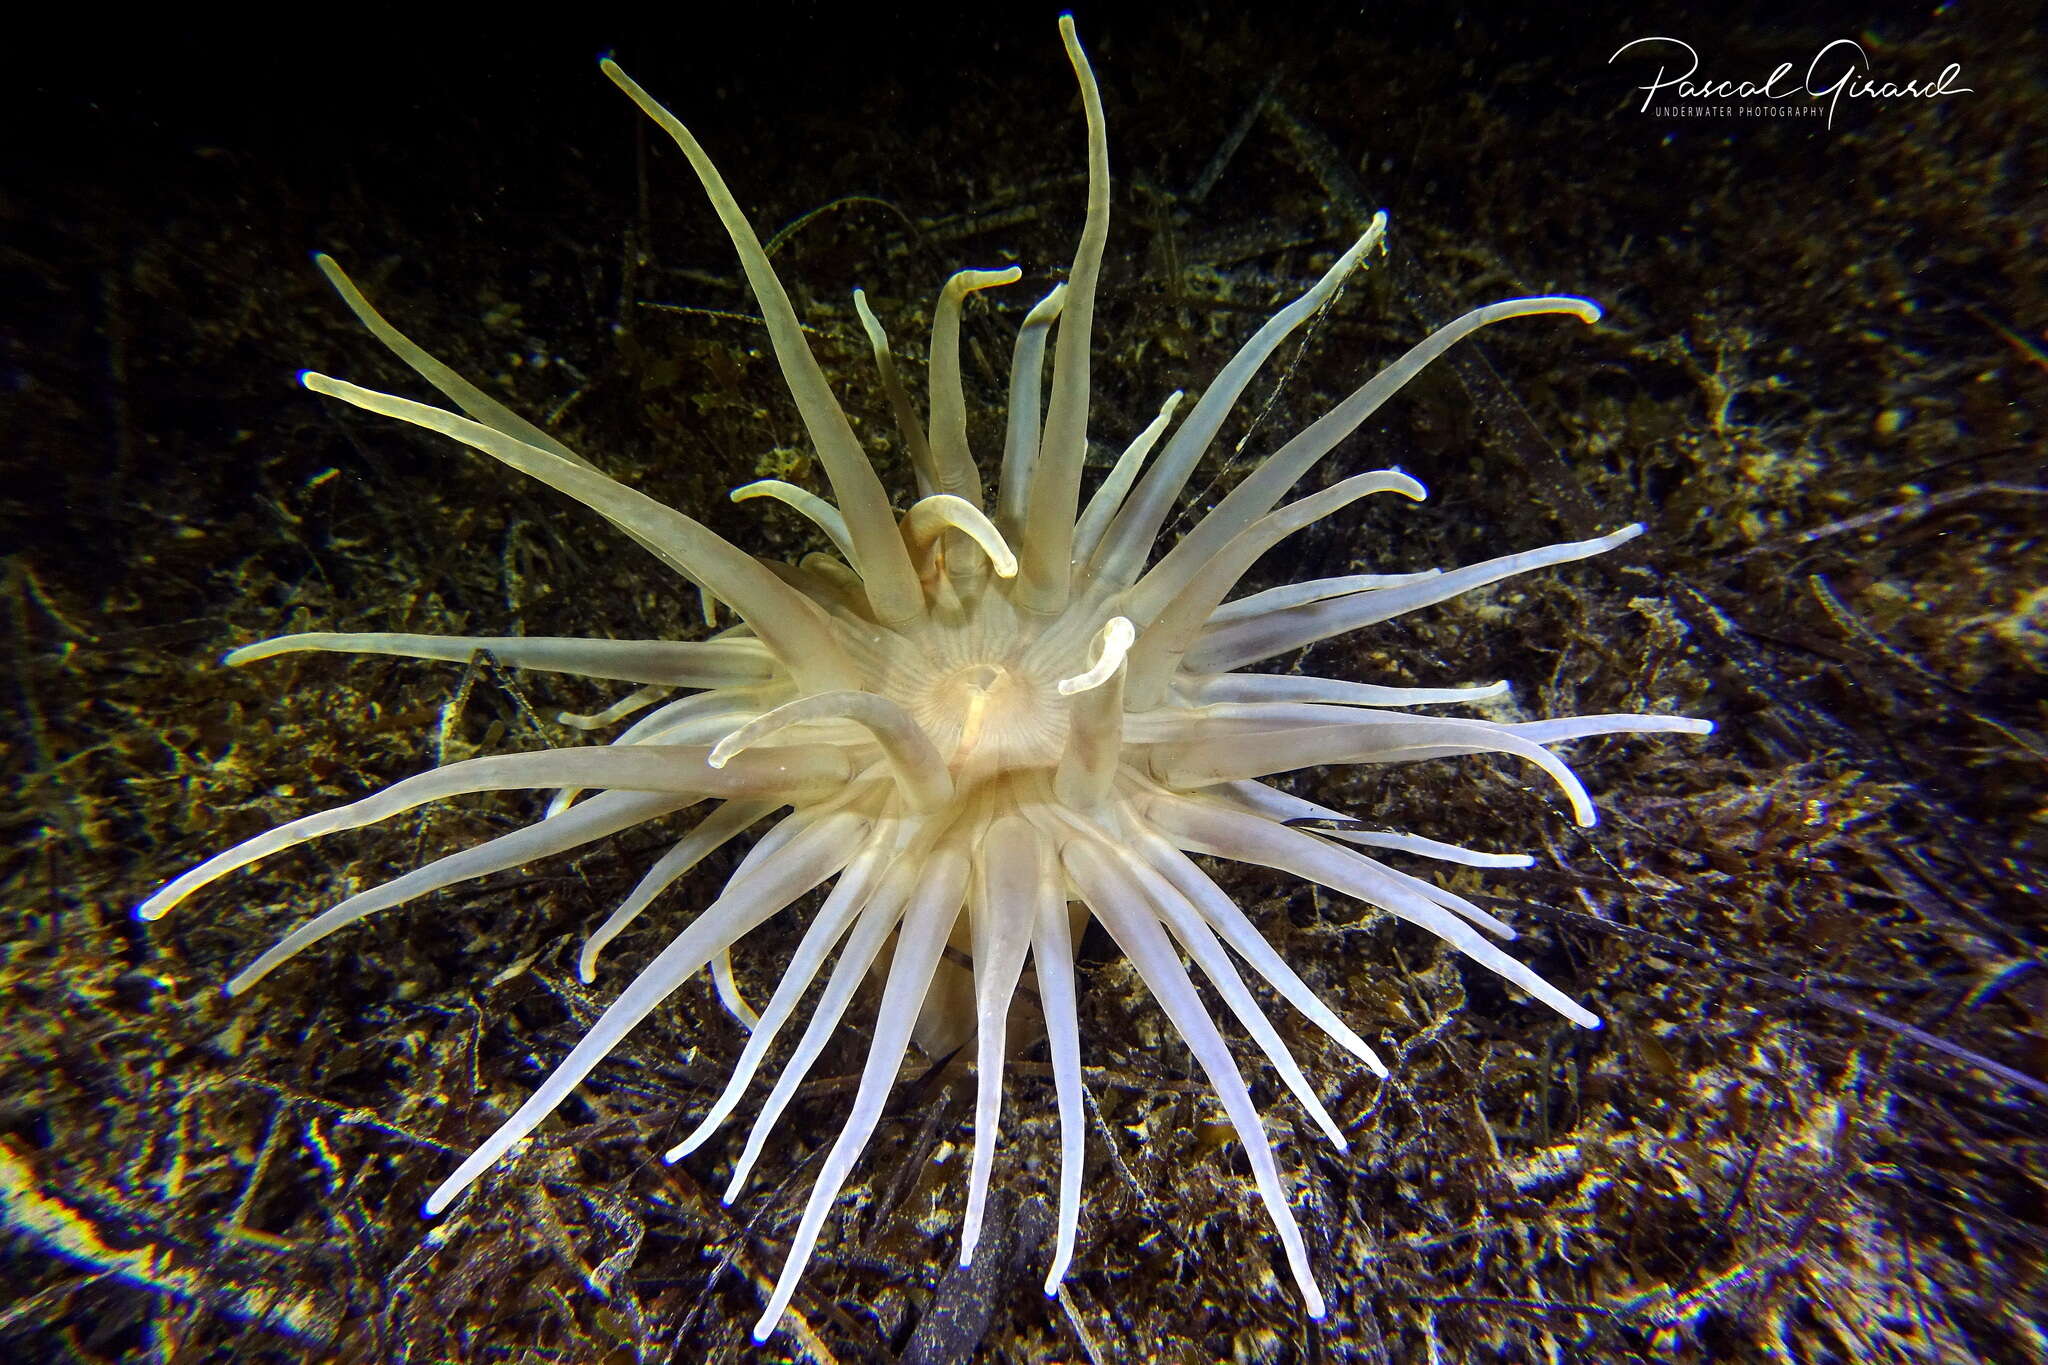 Image of burrowing anemone